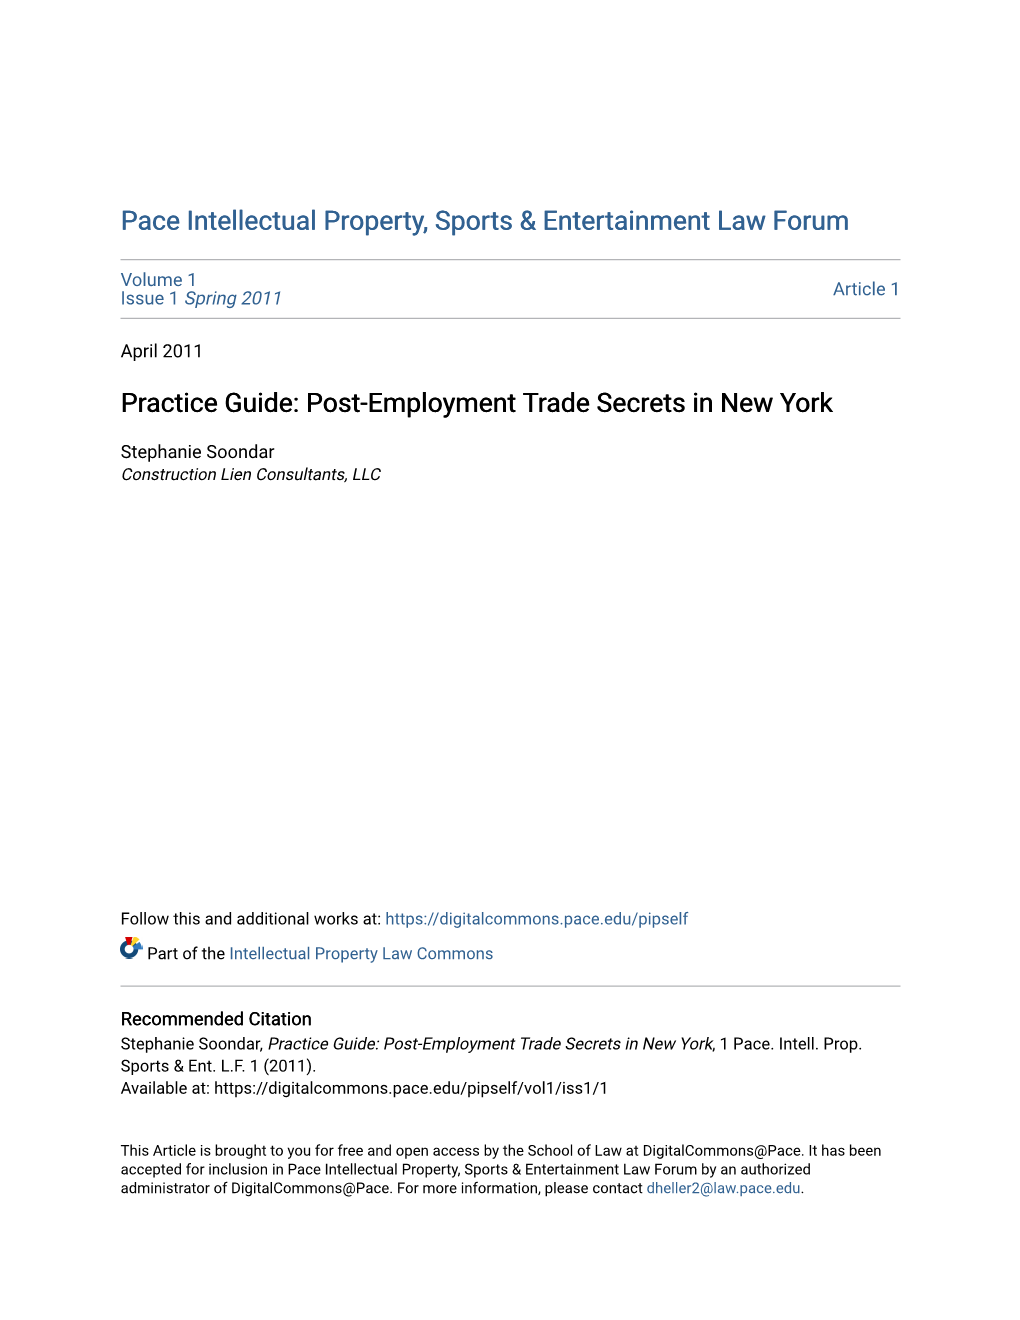 Post-Employment Trade Secrets in New York